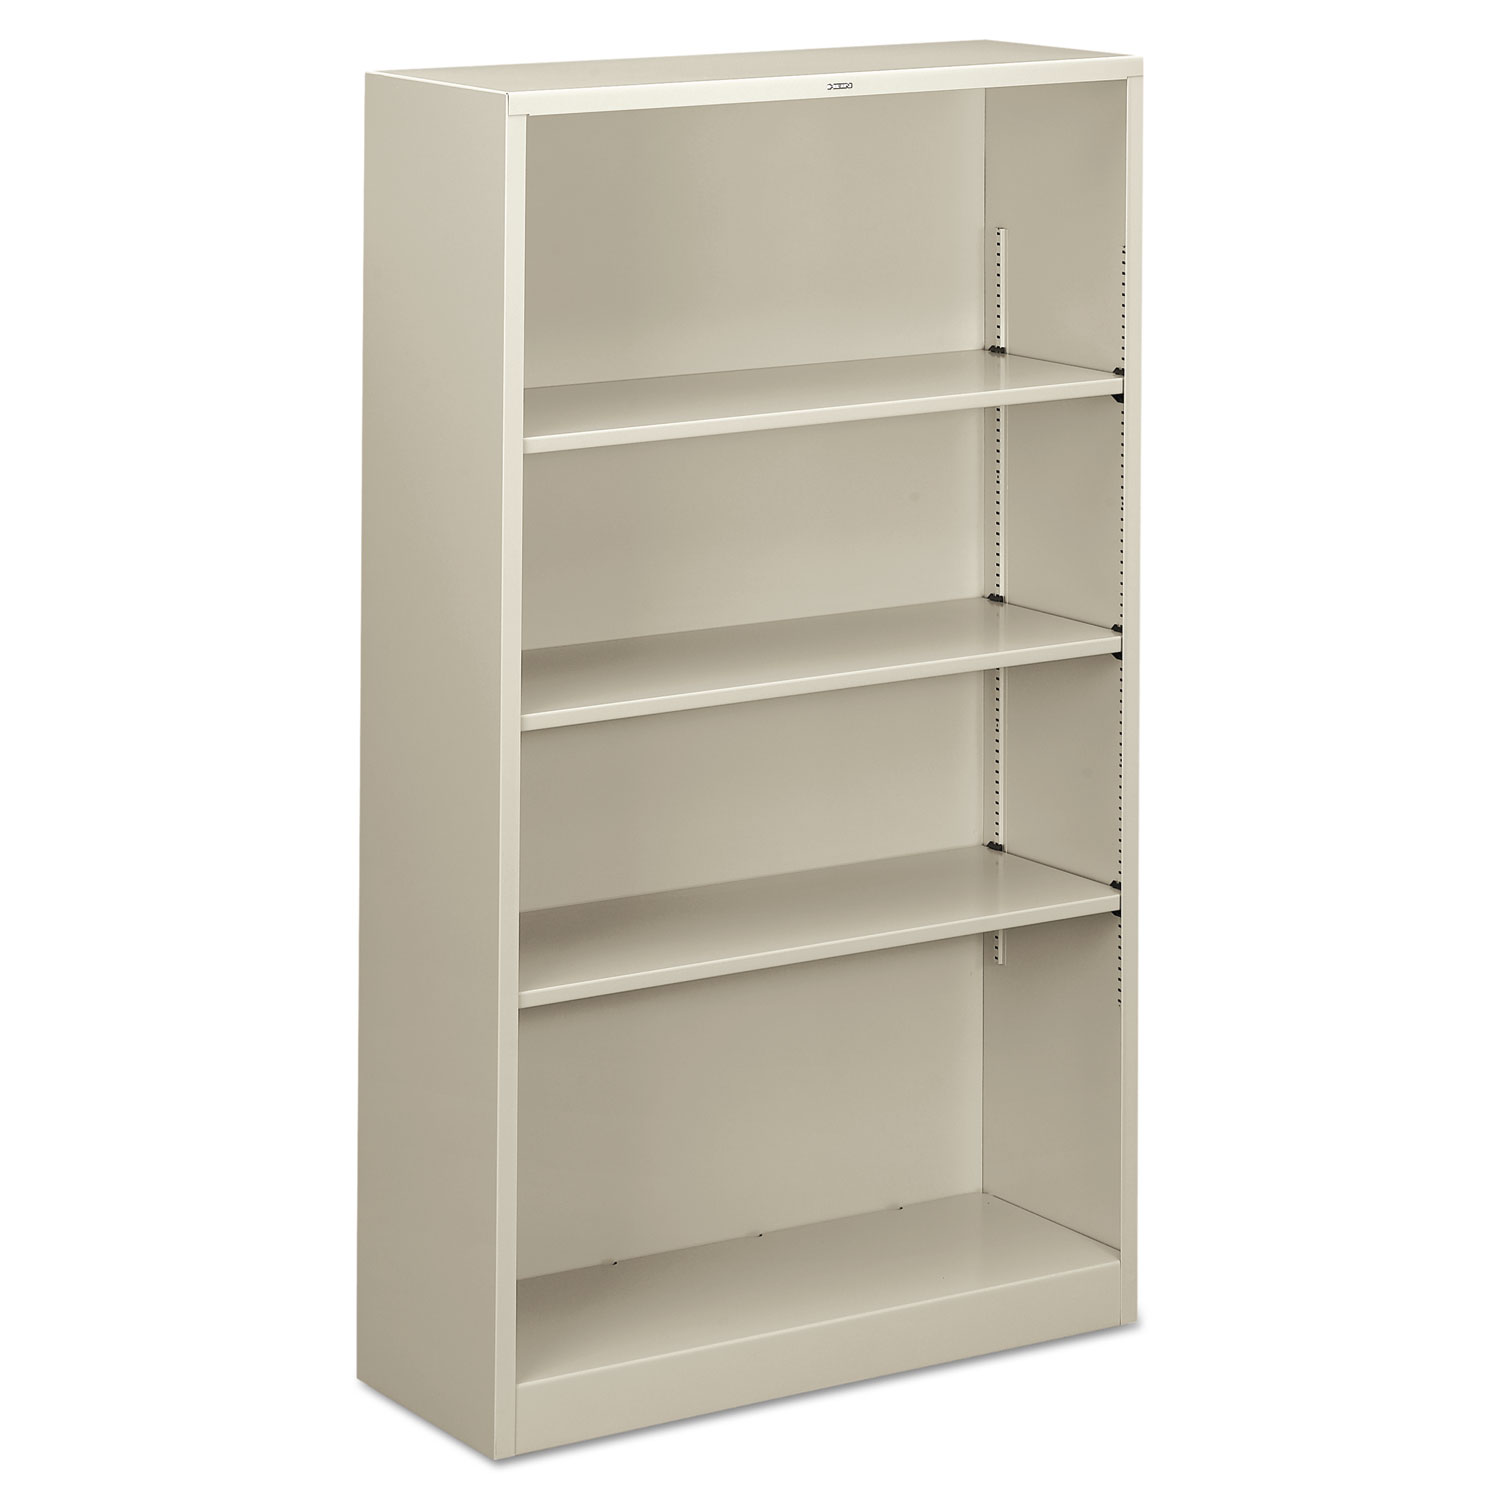  HON HS60ABC.Q Metal Bookcase, Four-Shelf, 34-1/2w x 12-5/8d x 59h, Light Gray (HONS60ABCQ) 